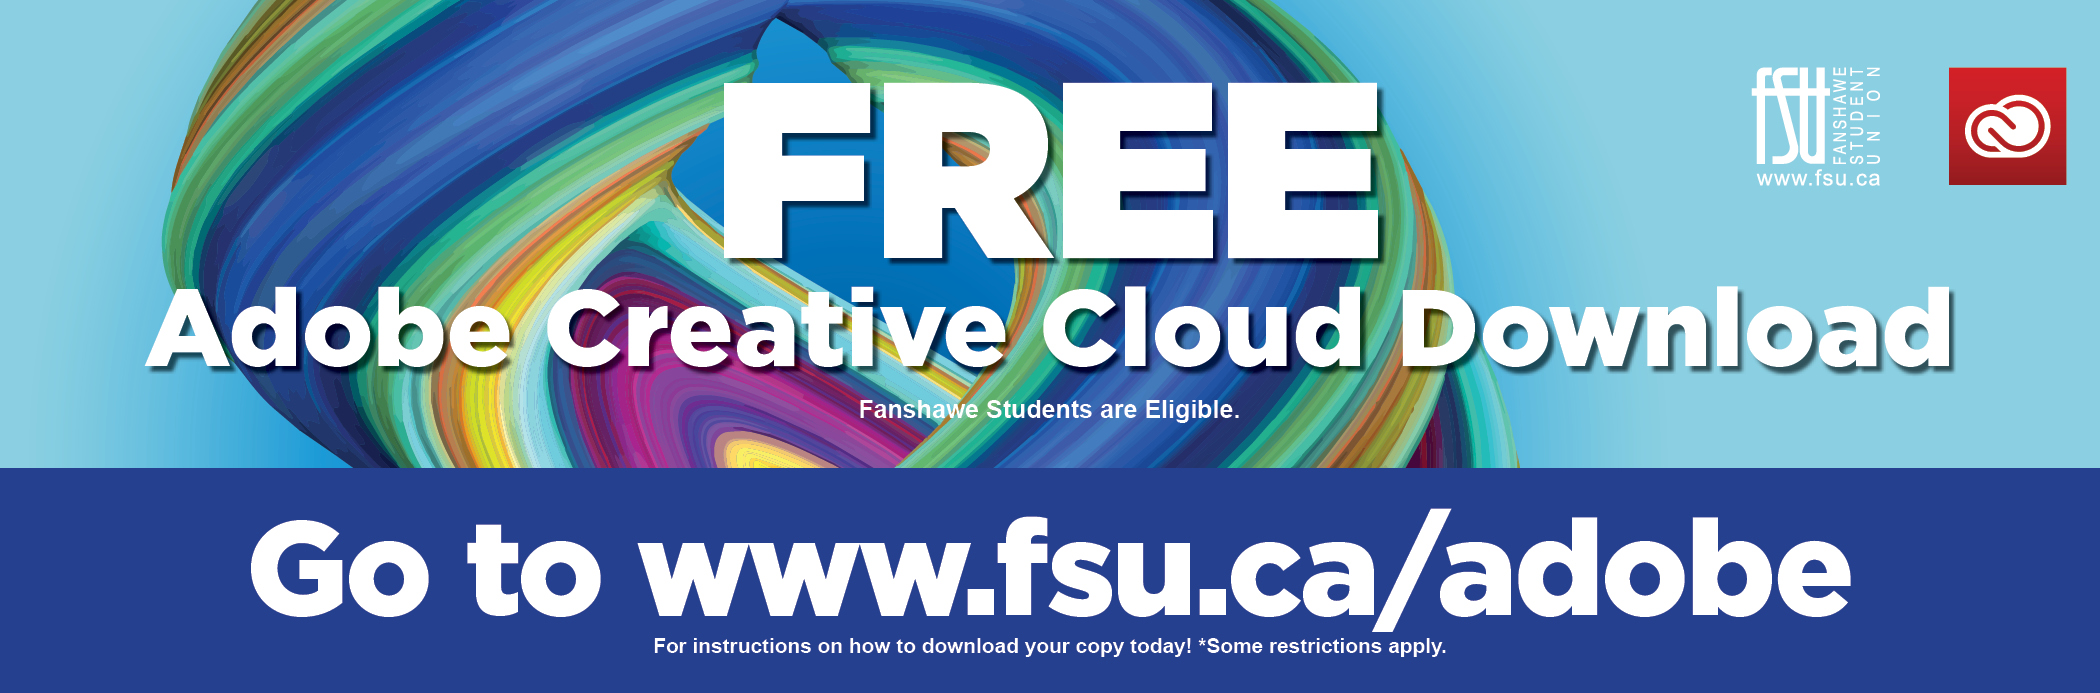 Free Adobe Creative Cloud access